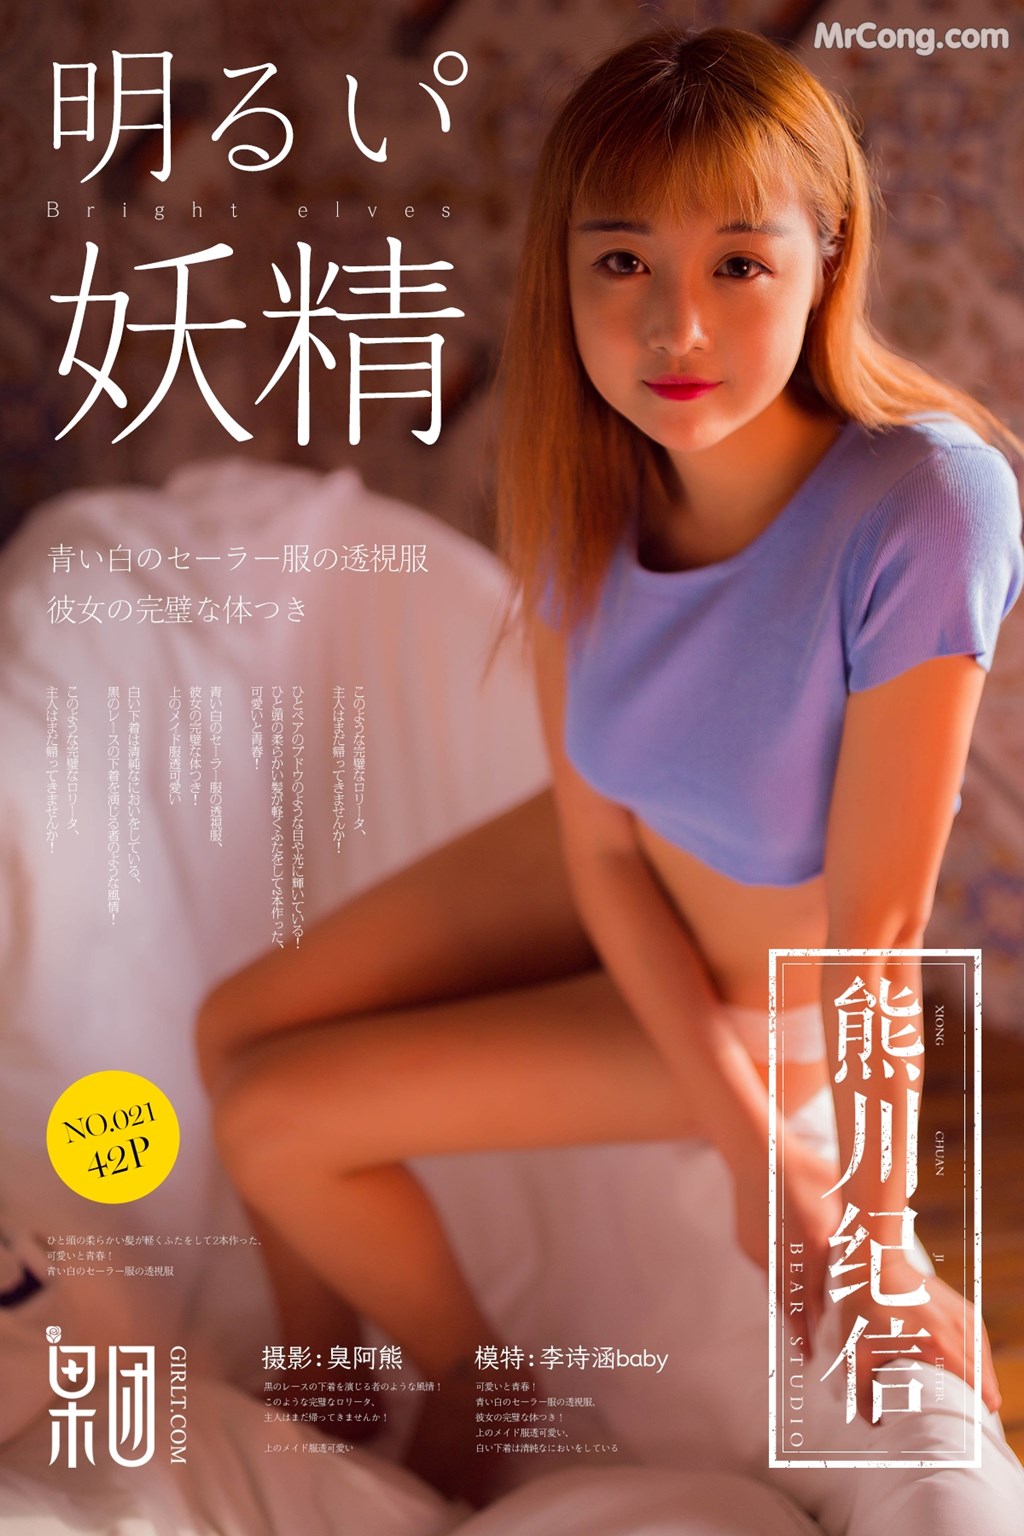 GIRLT XCJX No.021: Model Li Shi Han (李诗 涵 baby) (43 pictures) photo 1-0